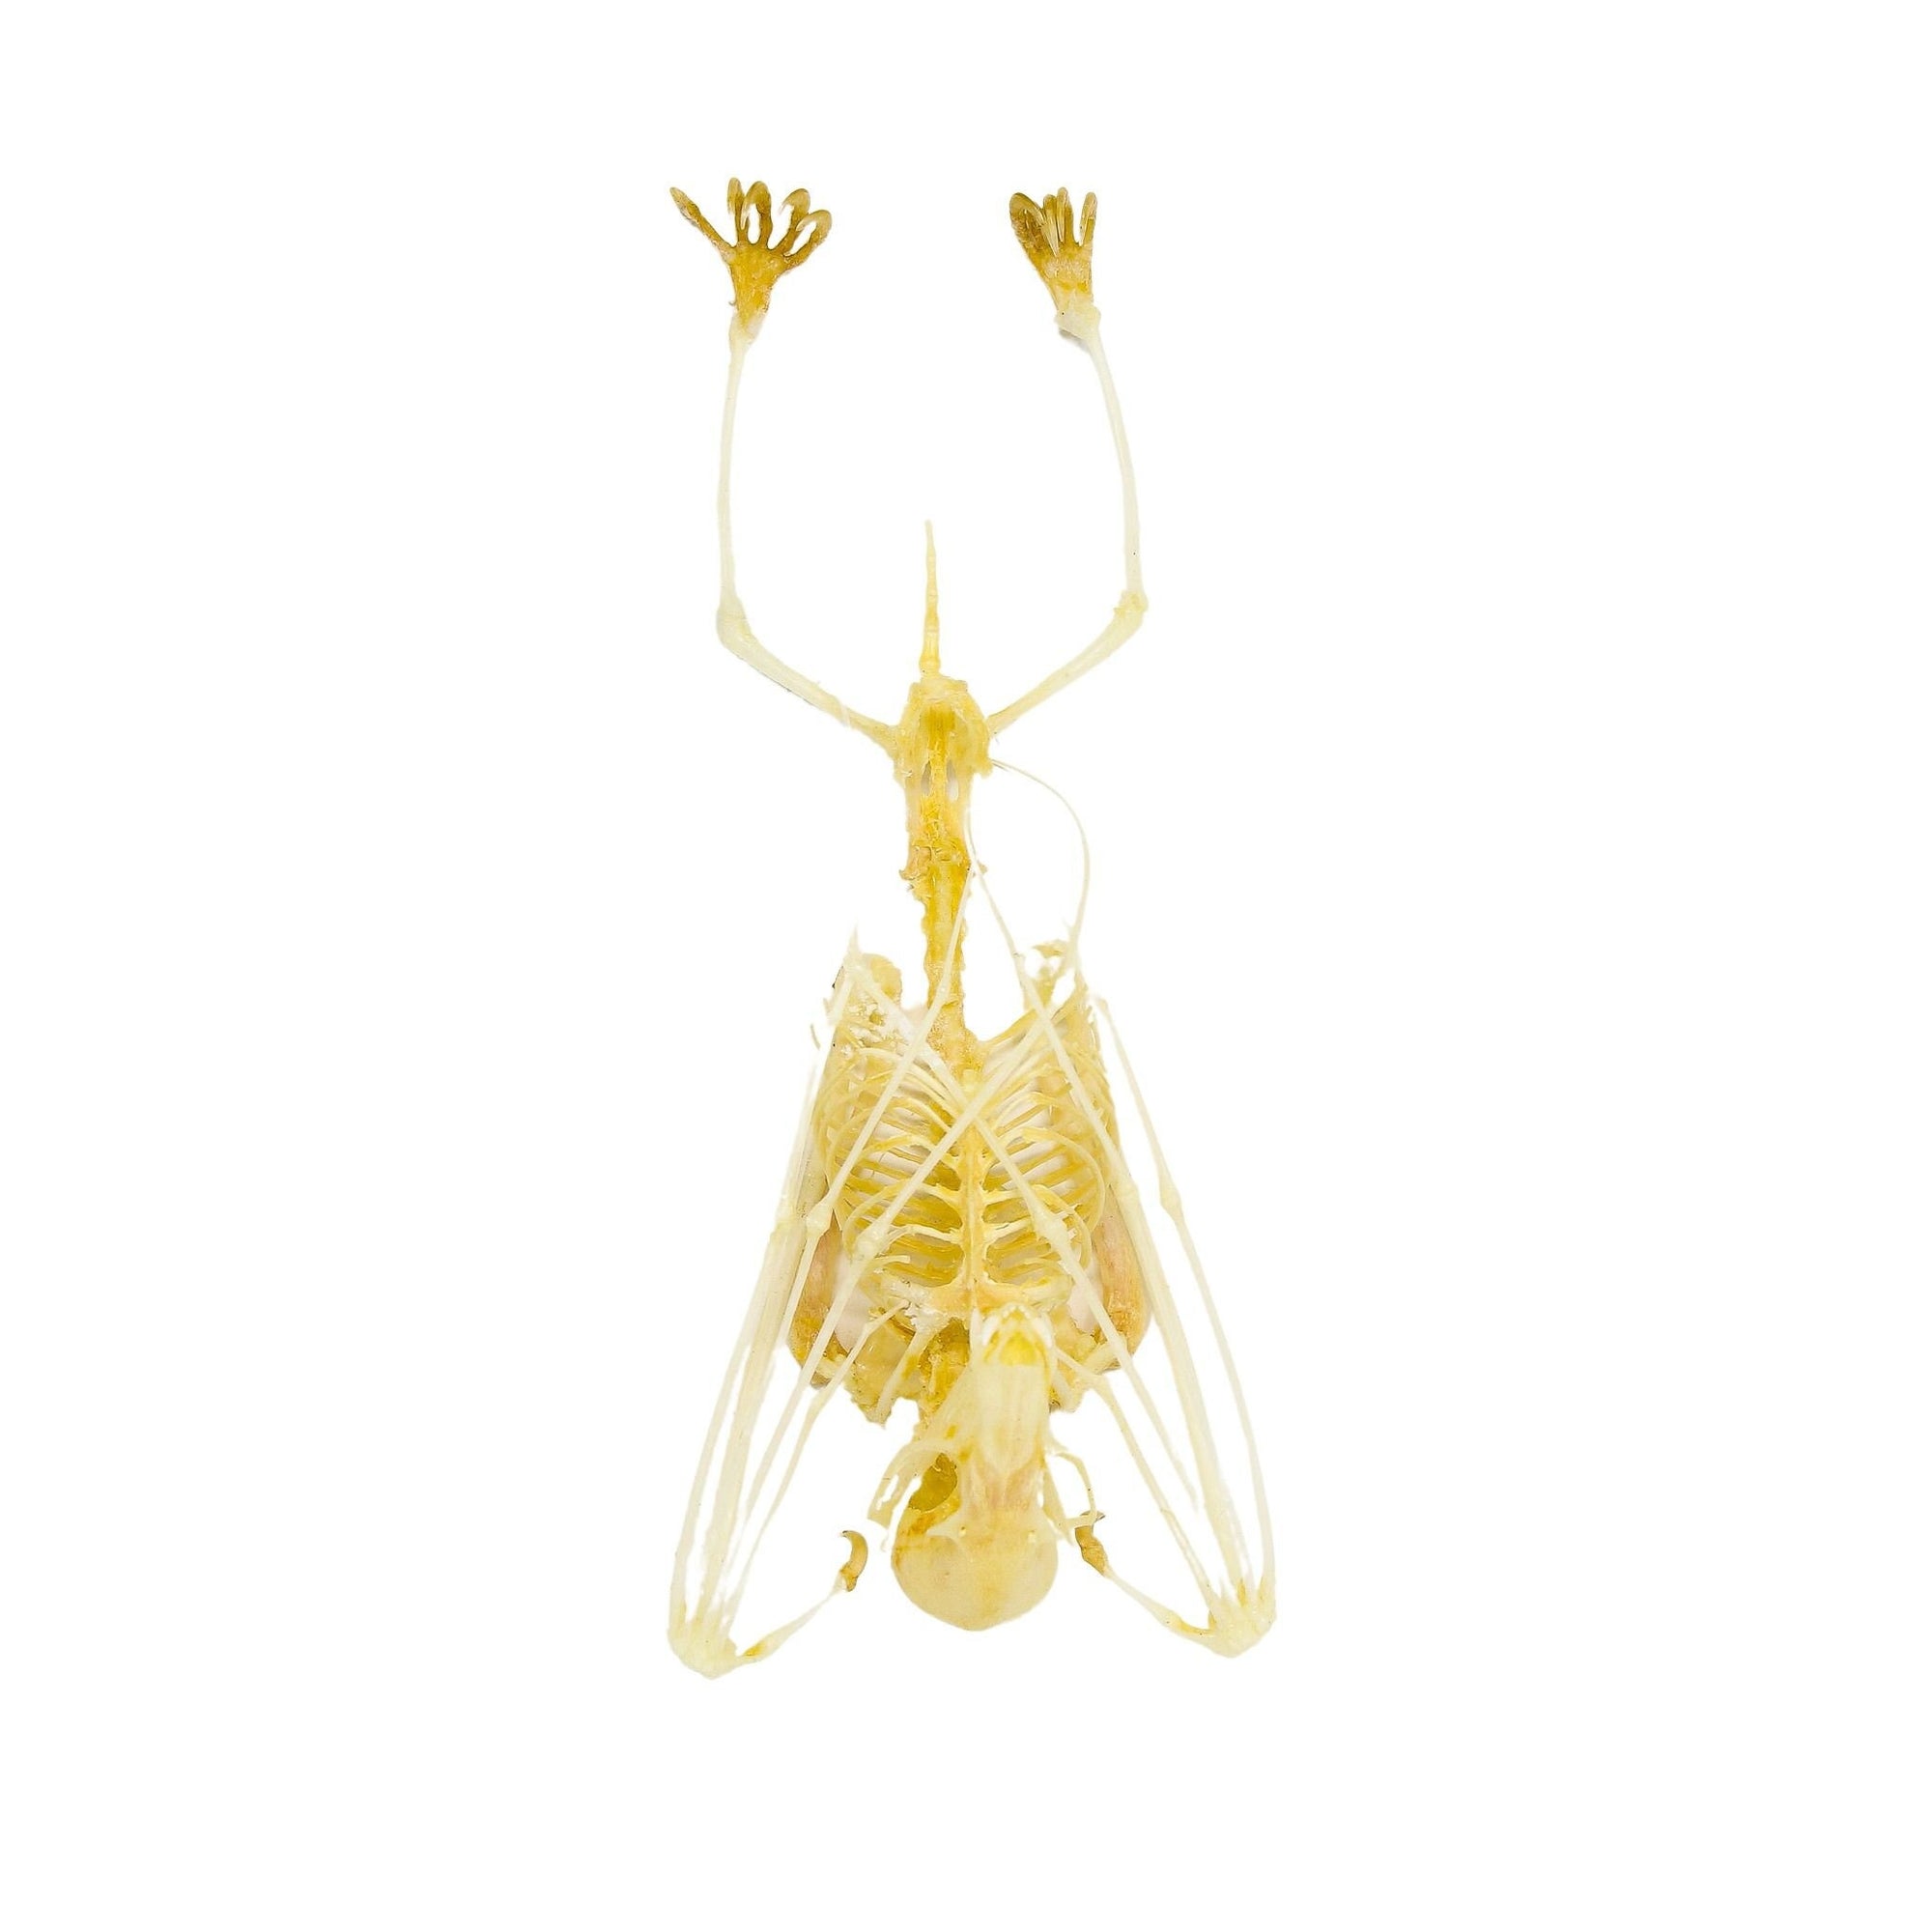 Cave Nectar Bat Skeleton Hanging (Eonycteris spelaea) | A1 Museum Quality Skeleton 5 Inch Specimen (Non-CITES)